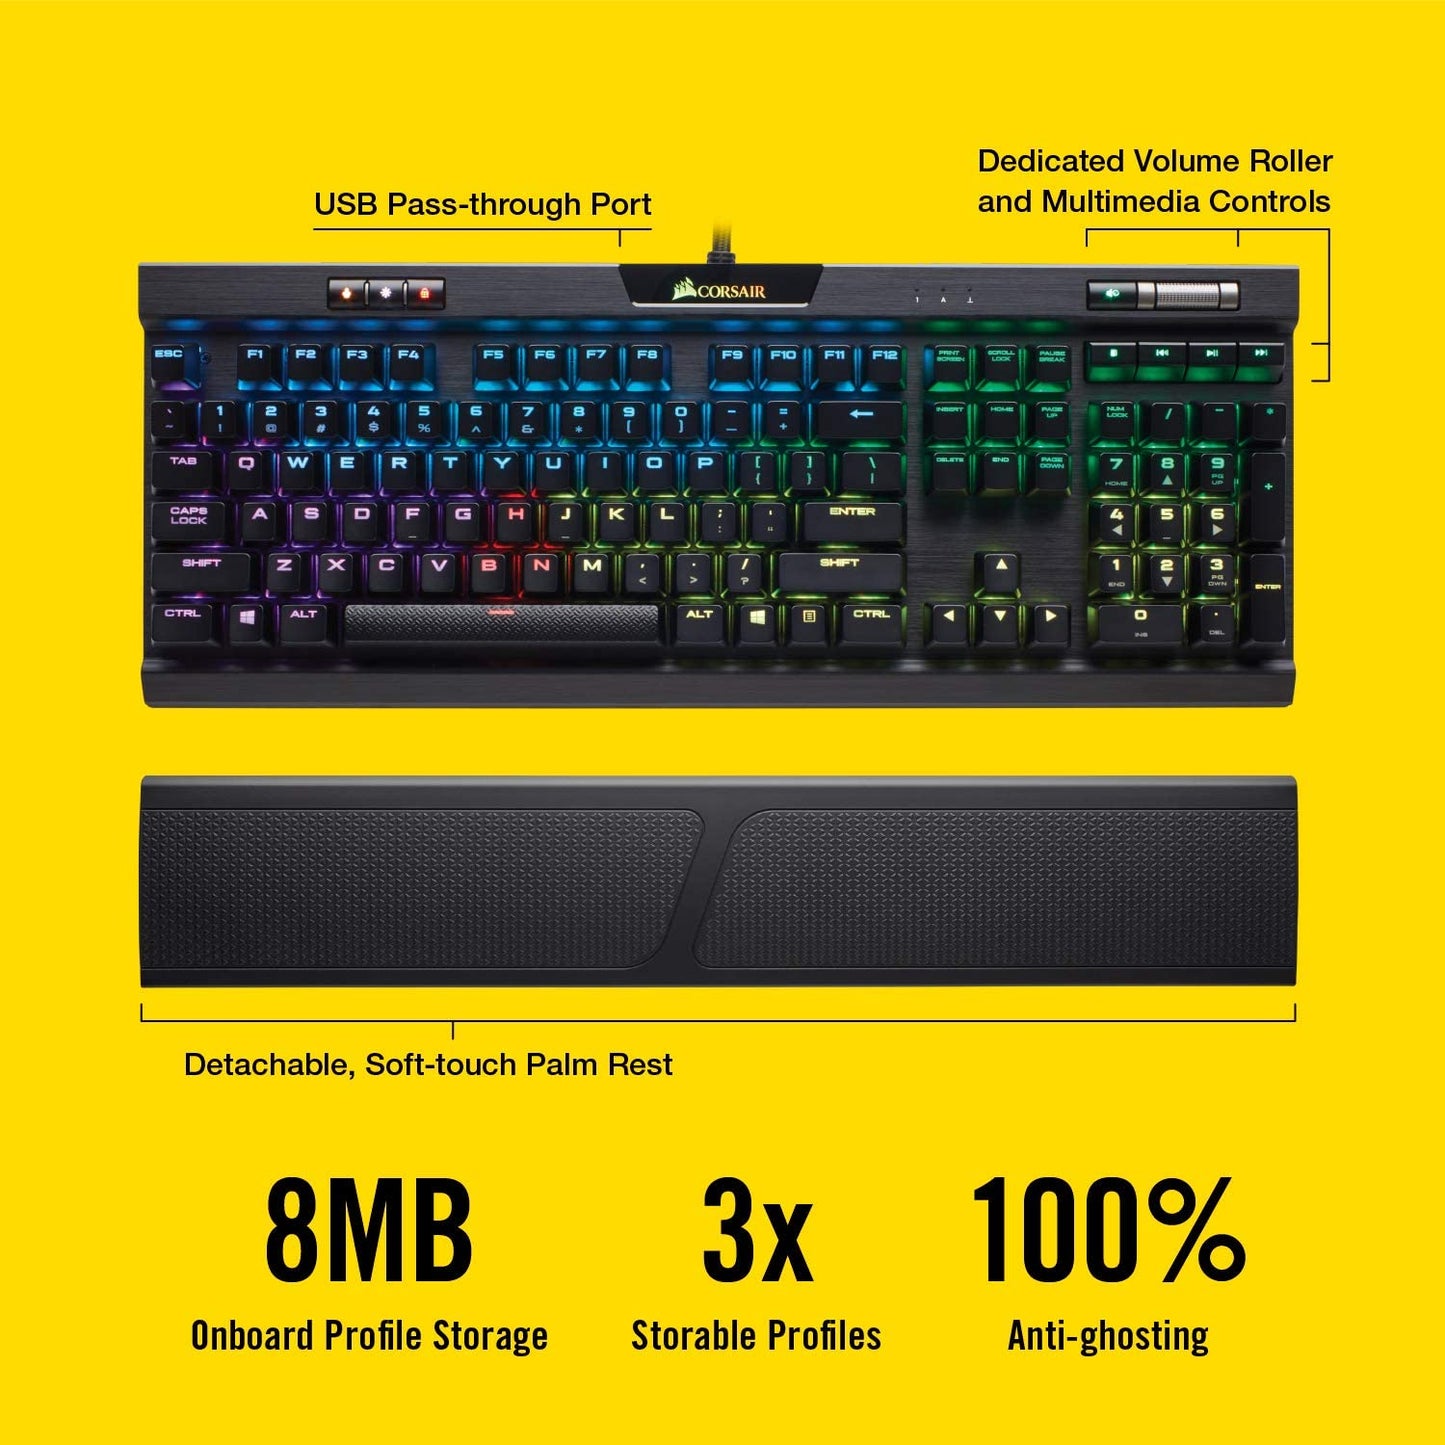 Corsair K70 RGB MK.2 Mechanical Gaming Keyboard - USB Passthrough & Media Controls - Linear & Quiet - Cherry MX Red - RGB LED Backlit